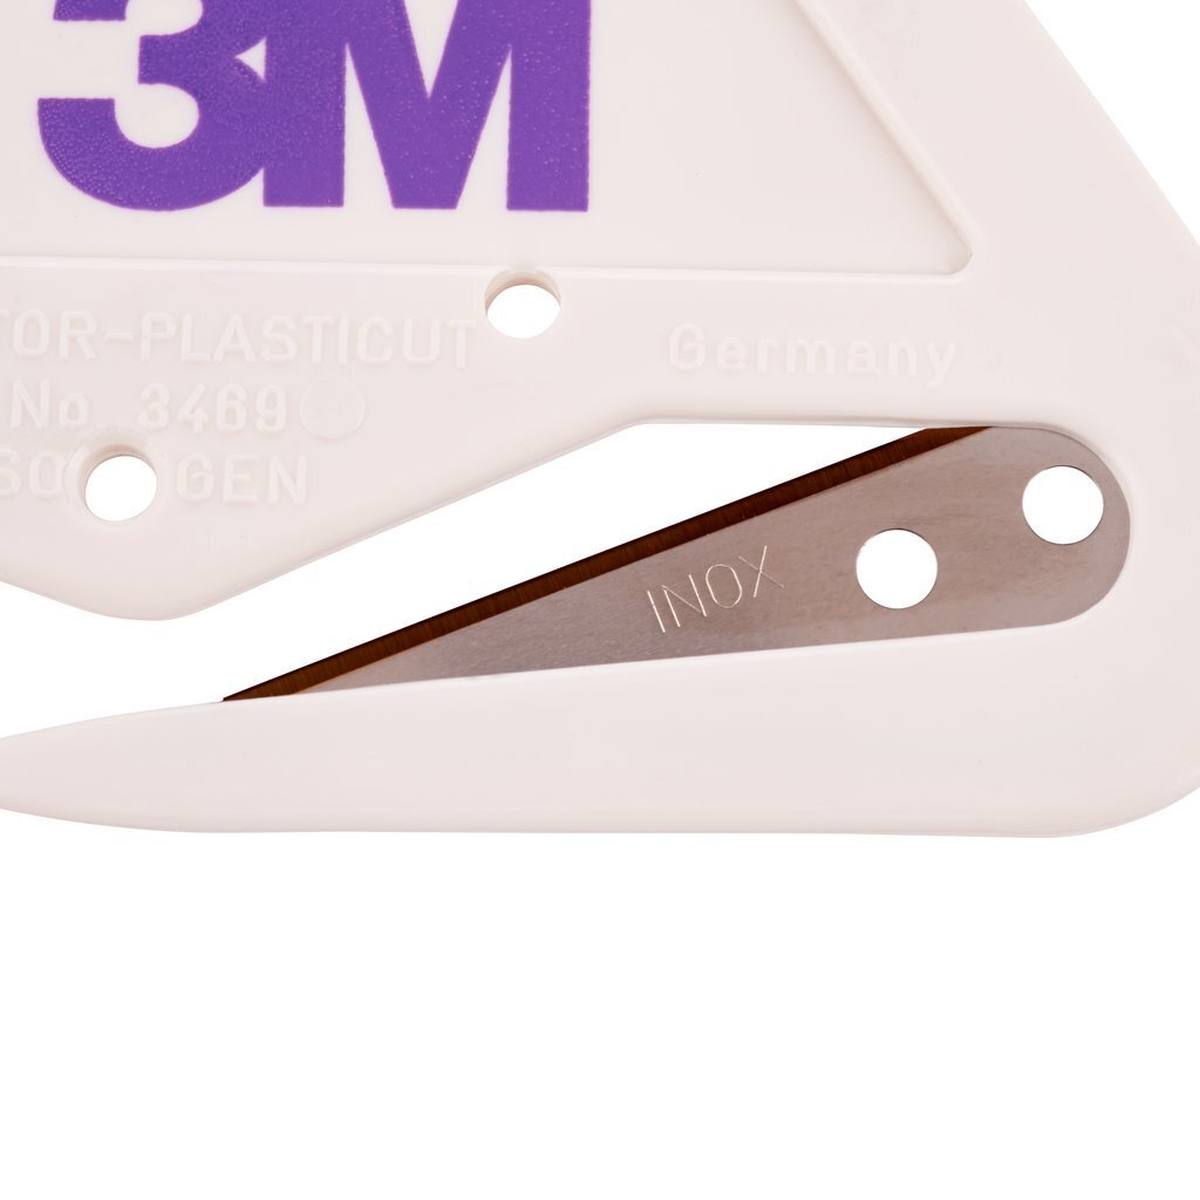 3M Blade for Premium masking film, white